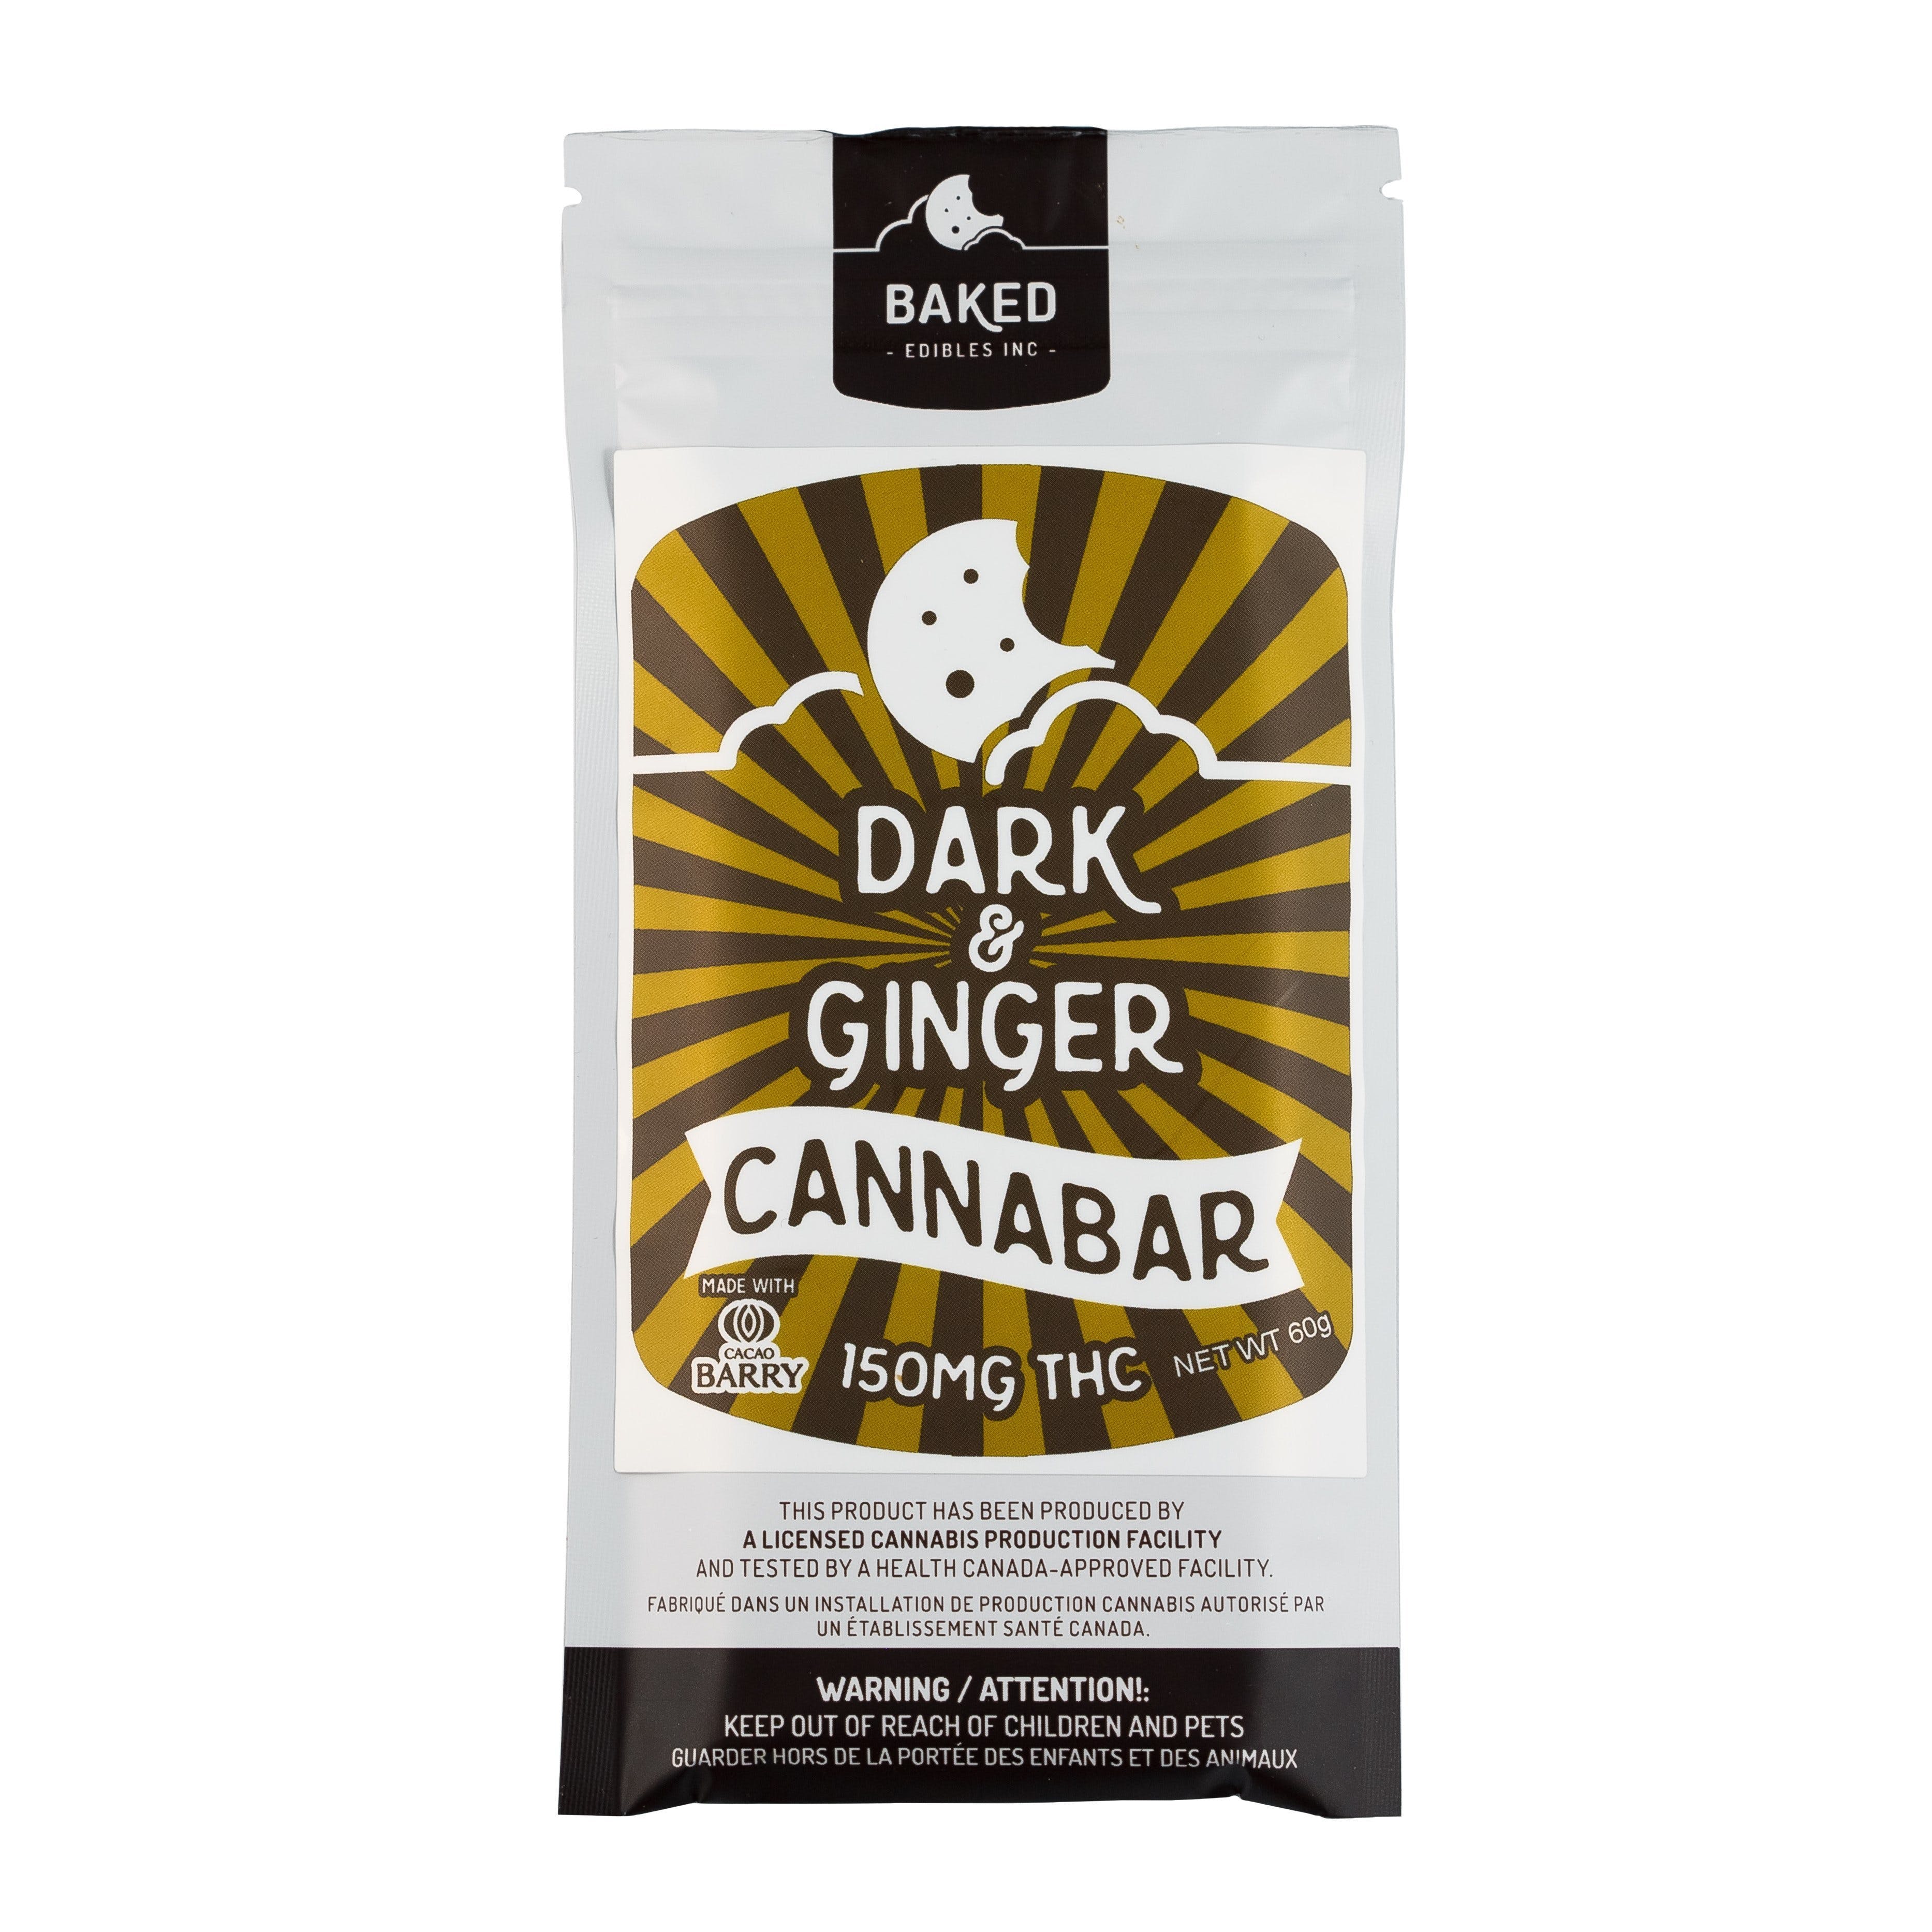 Baked Edible's Dark & Ginger Cannabar 150mg THC